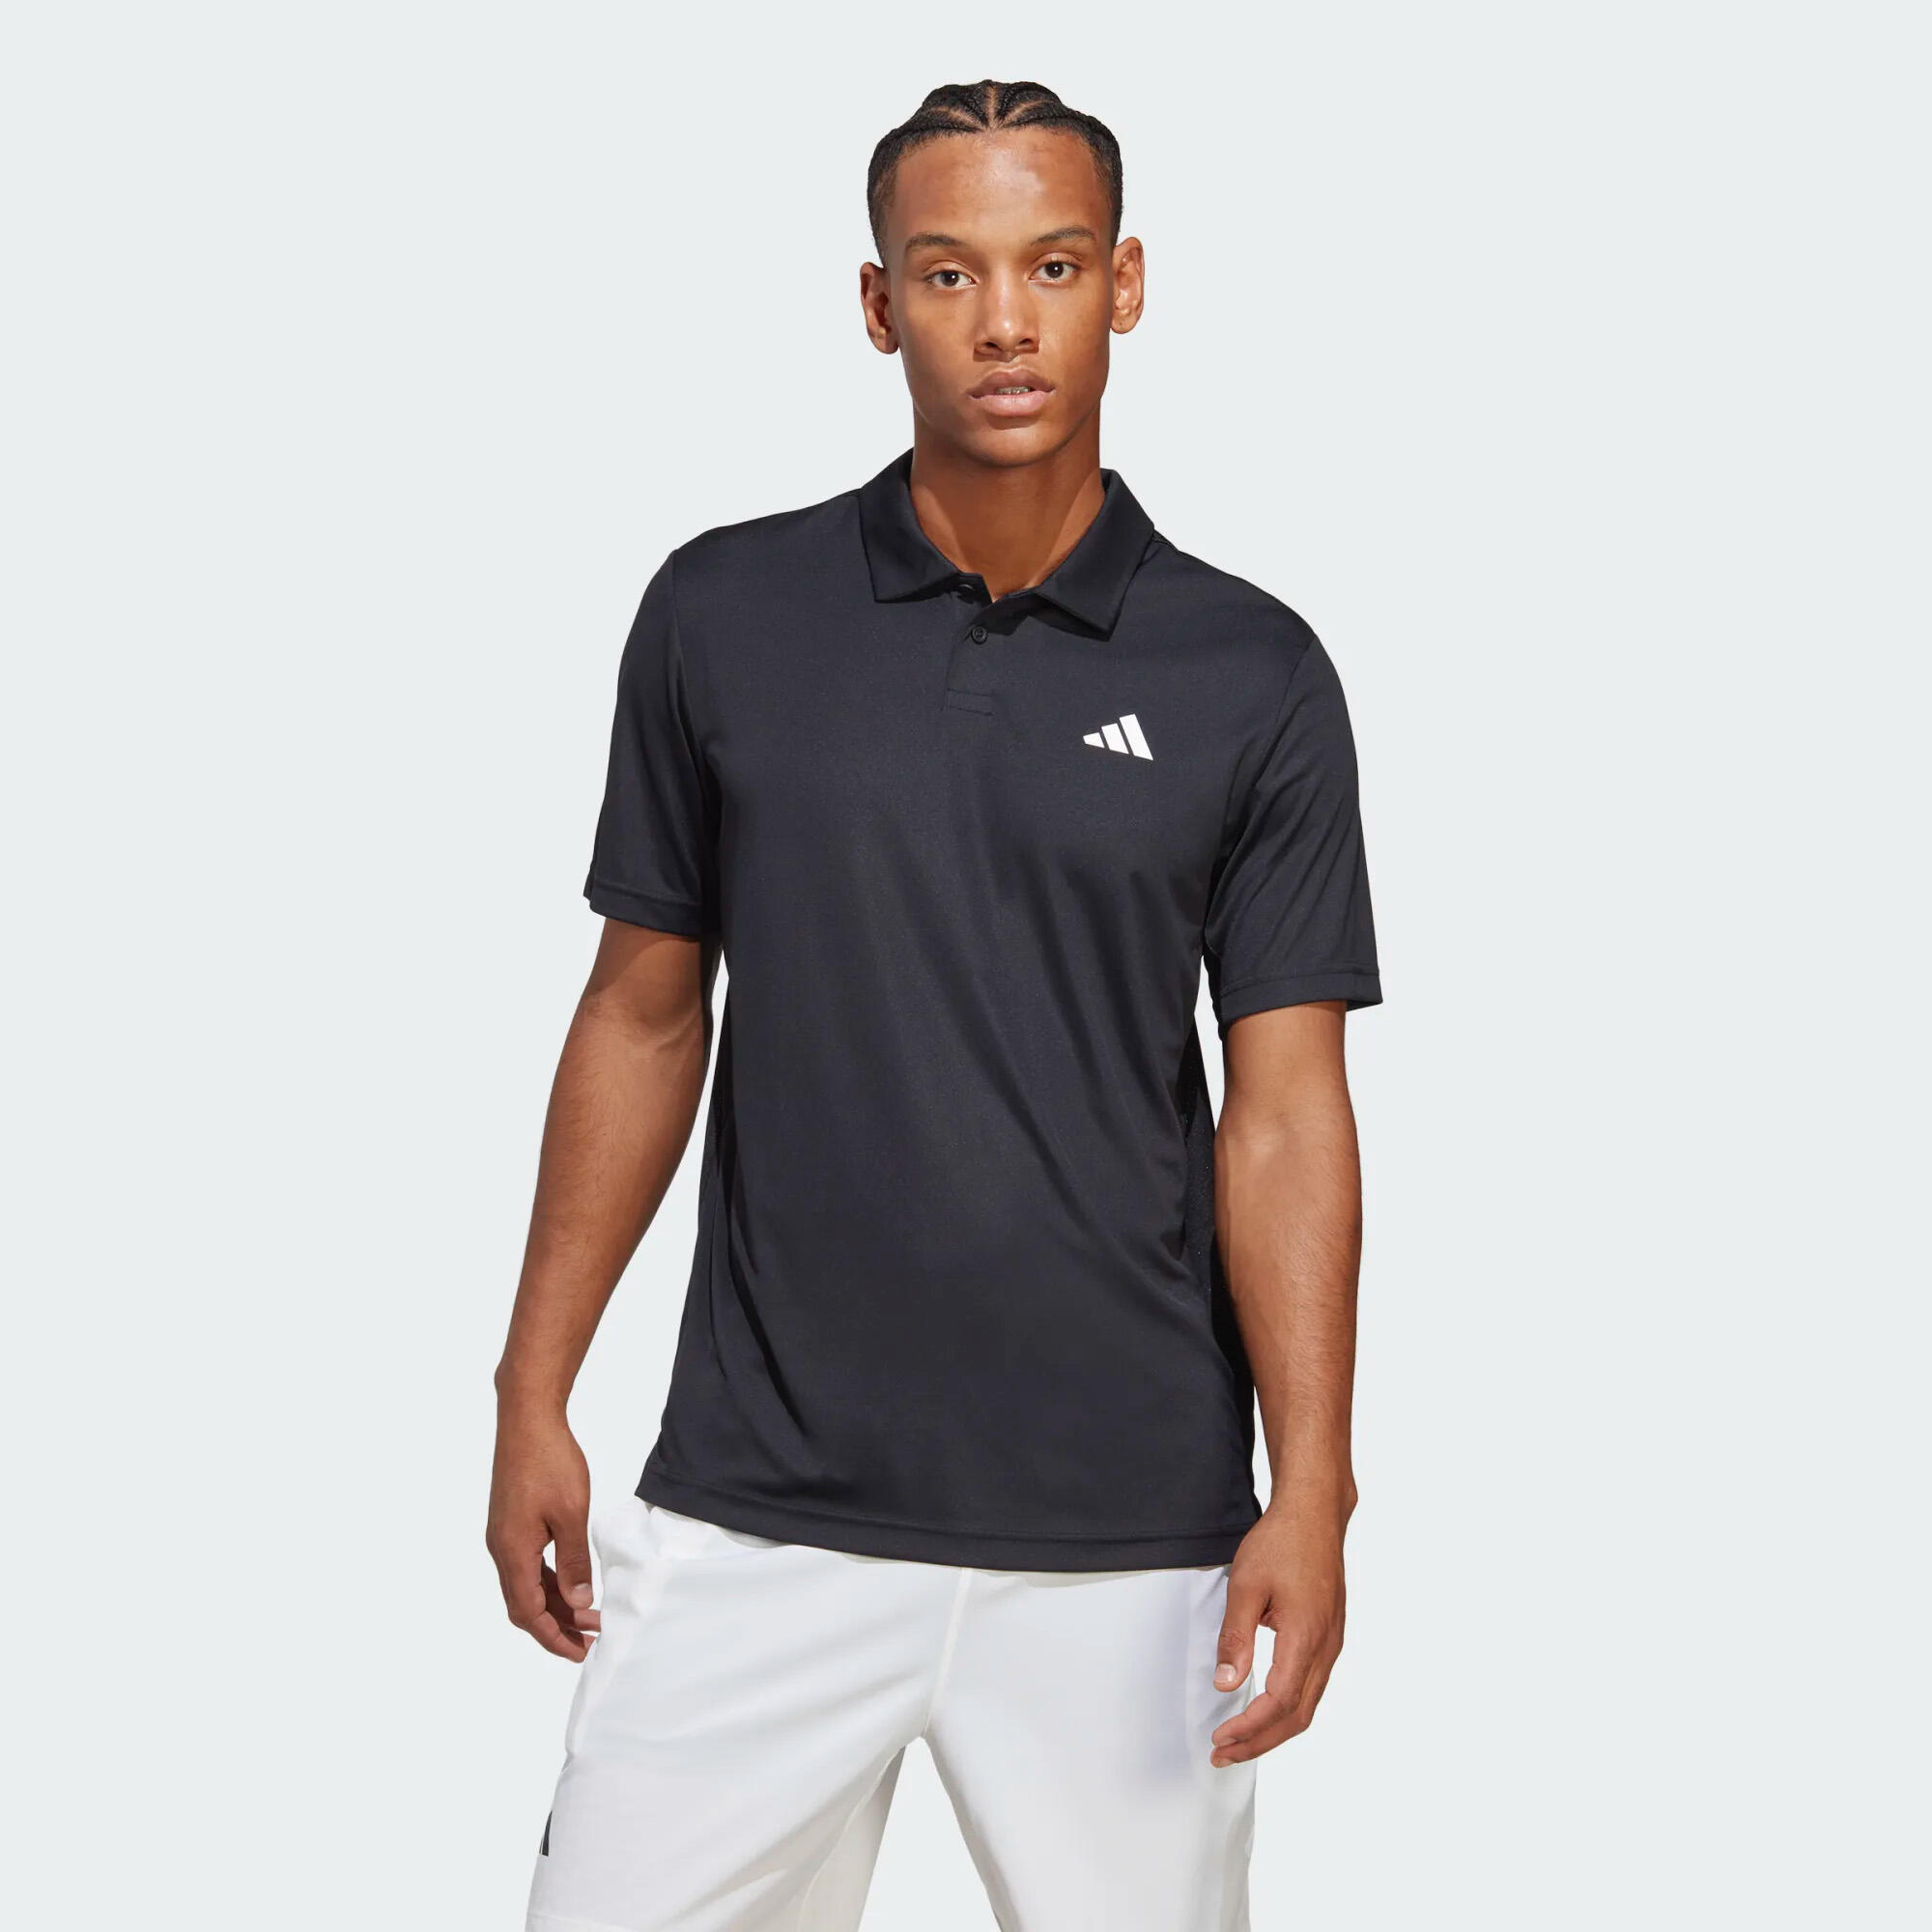 ADIDAS Men's Short-Sleeved Tennis Polo Club Shirt - Black